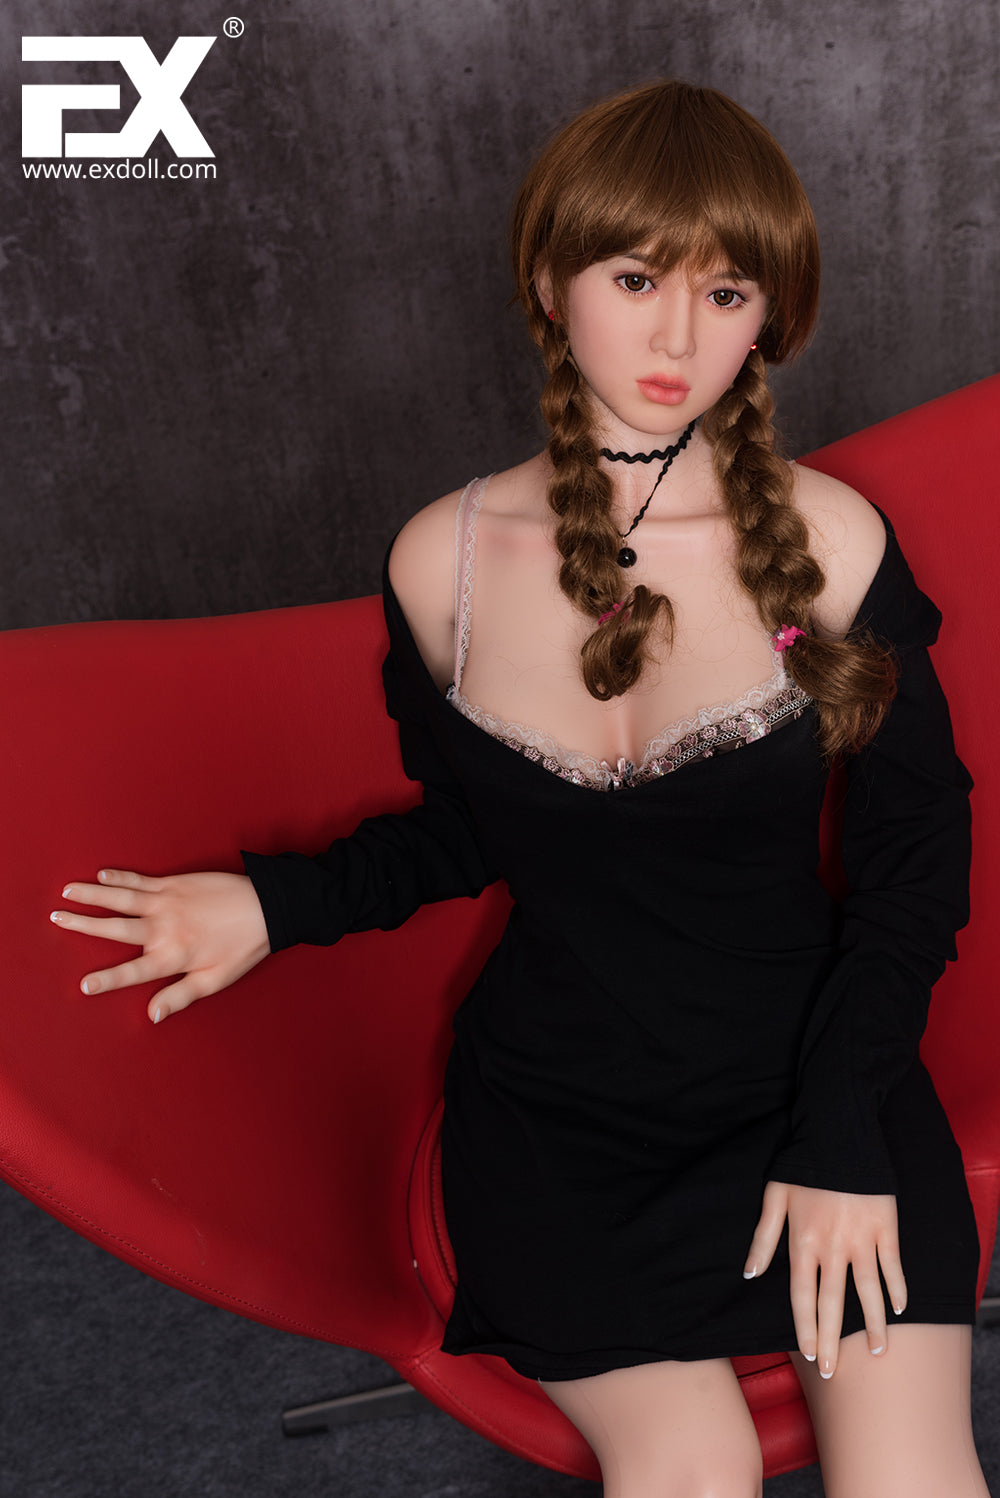 EX Doll Ukiyoe Series 170 cm Silicone - Hatsuha | Buy Sex Dolls at DOLLS ACTUALLY